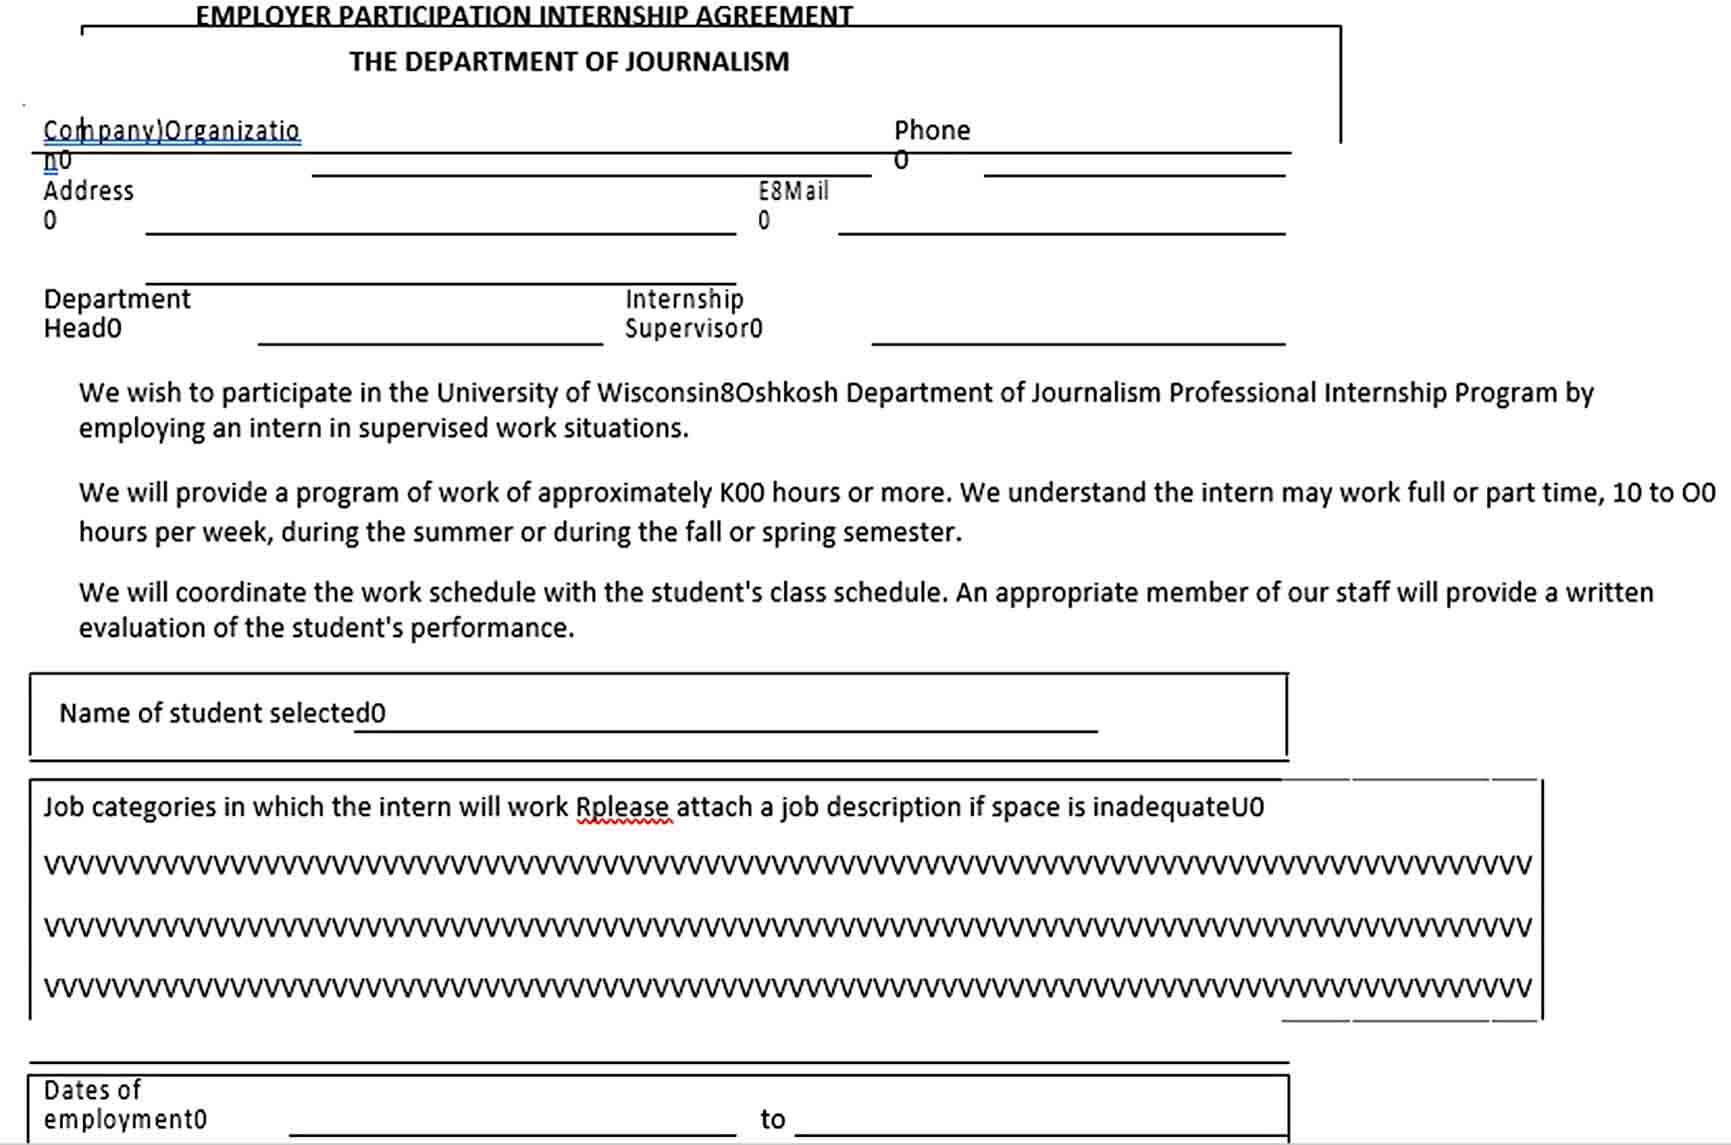 Sample Employer Participation Internship Agreement Format